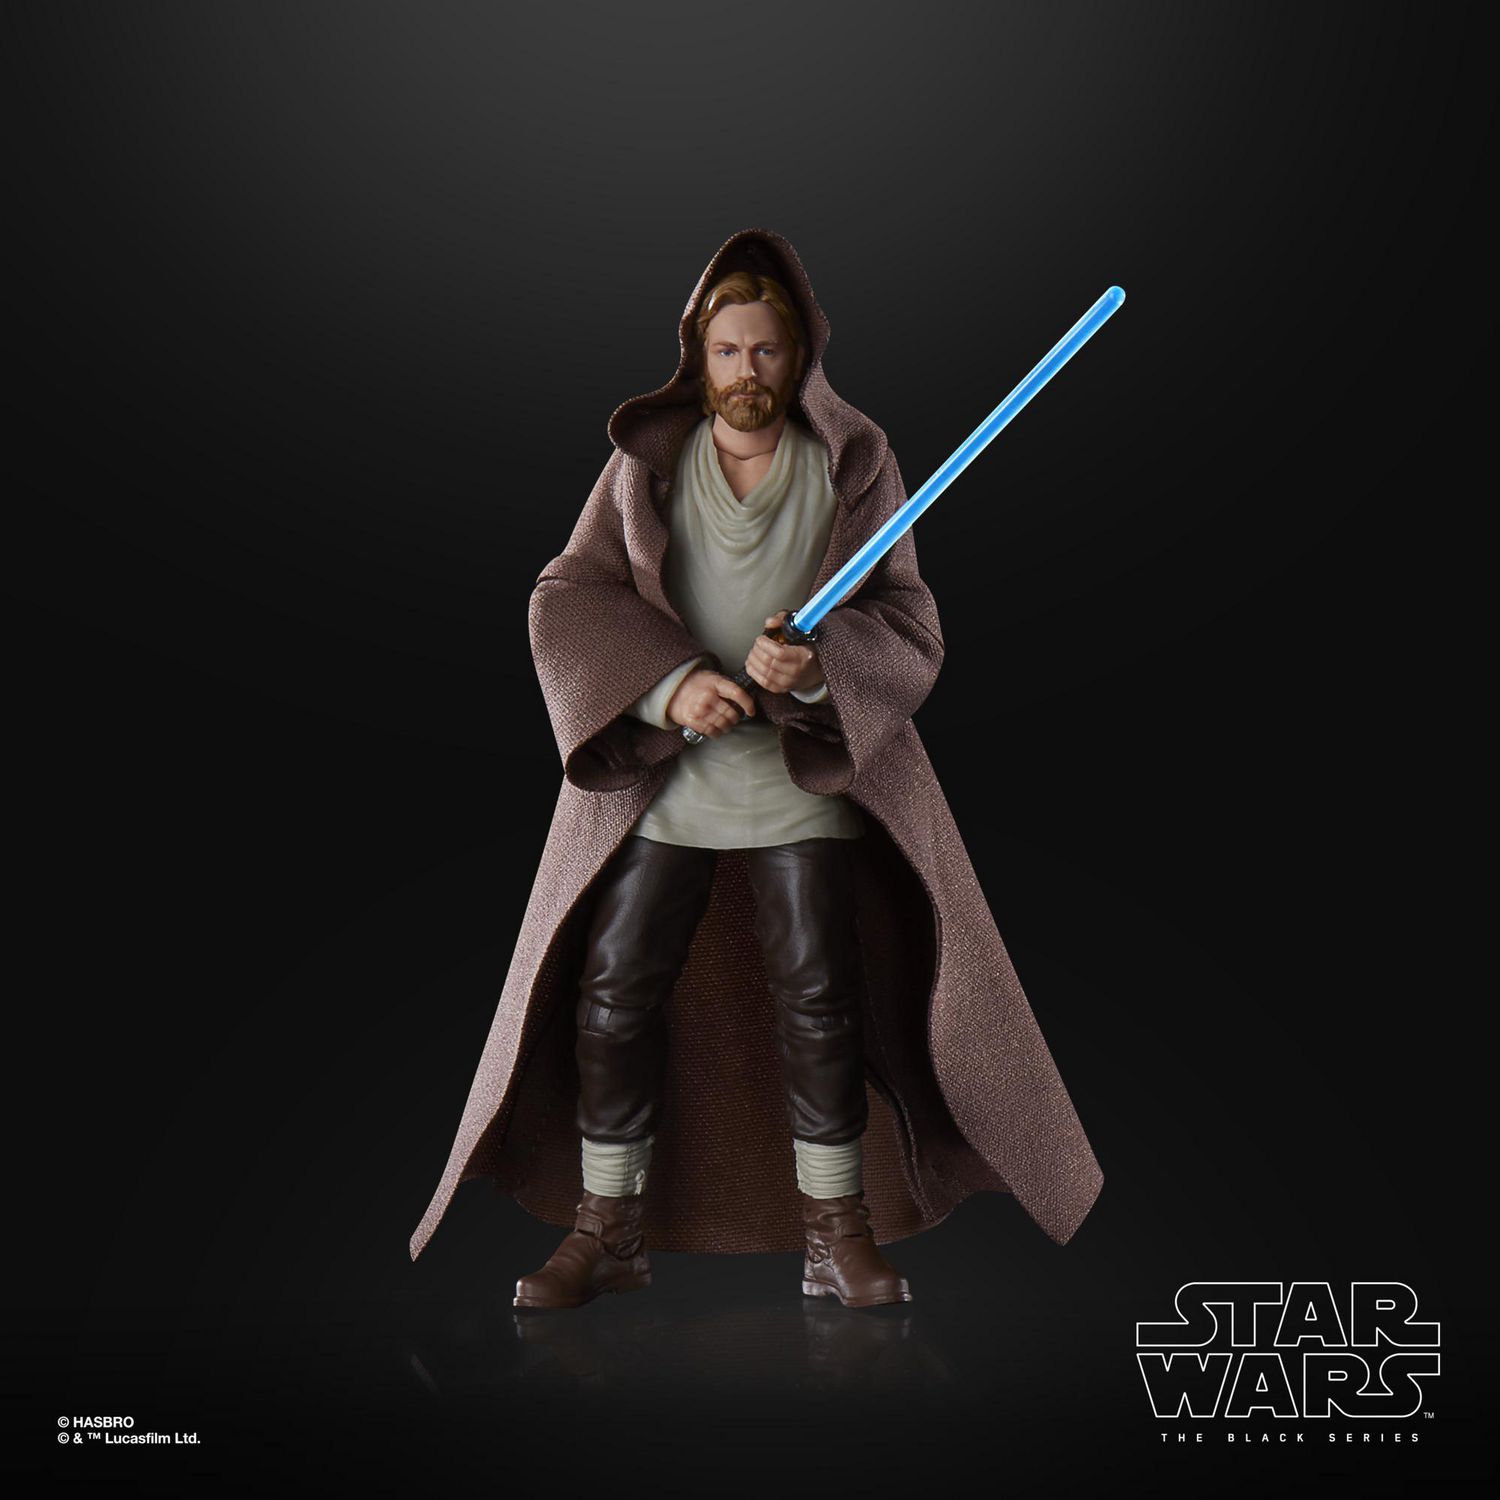 Star Wars The Black Series Obi-Wan Kenobi (Wandering Jedi) Toy 6 